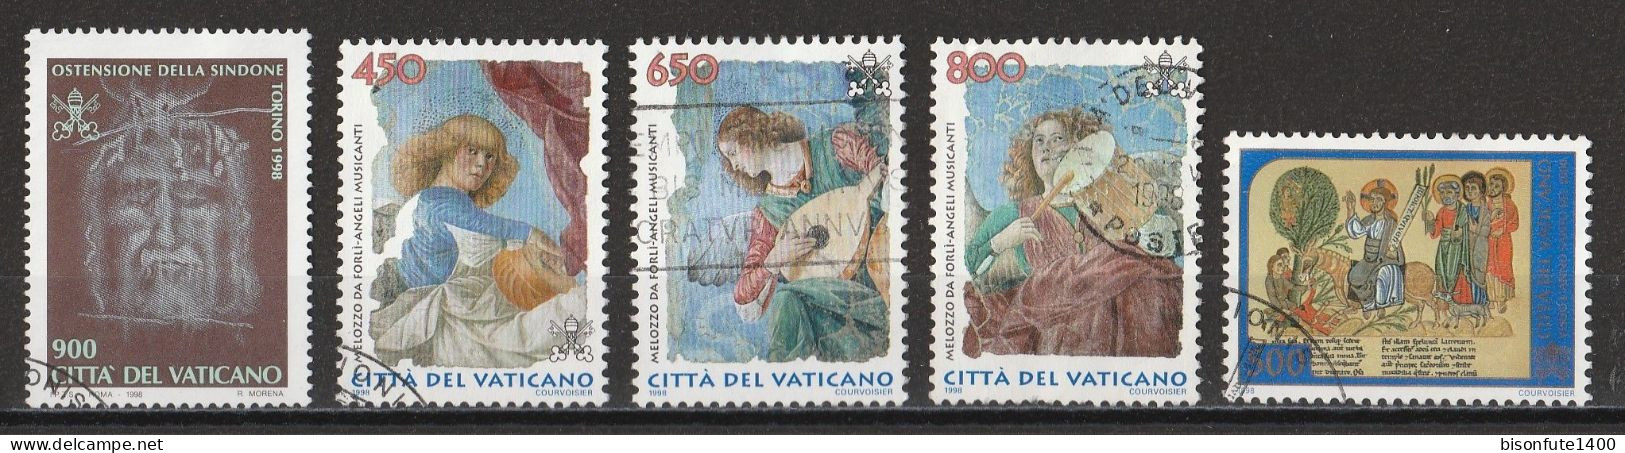 Vatican 1998 : Timbres Yvert & Tellier N° 1106 - 1108 - 1109 - 1110 - 1114 - 1115 - 1121 Et 1123 Oblitérés - Usados